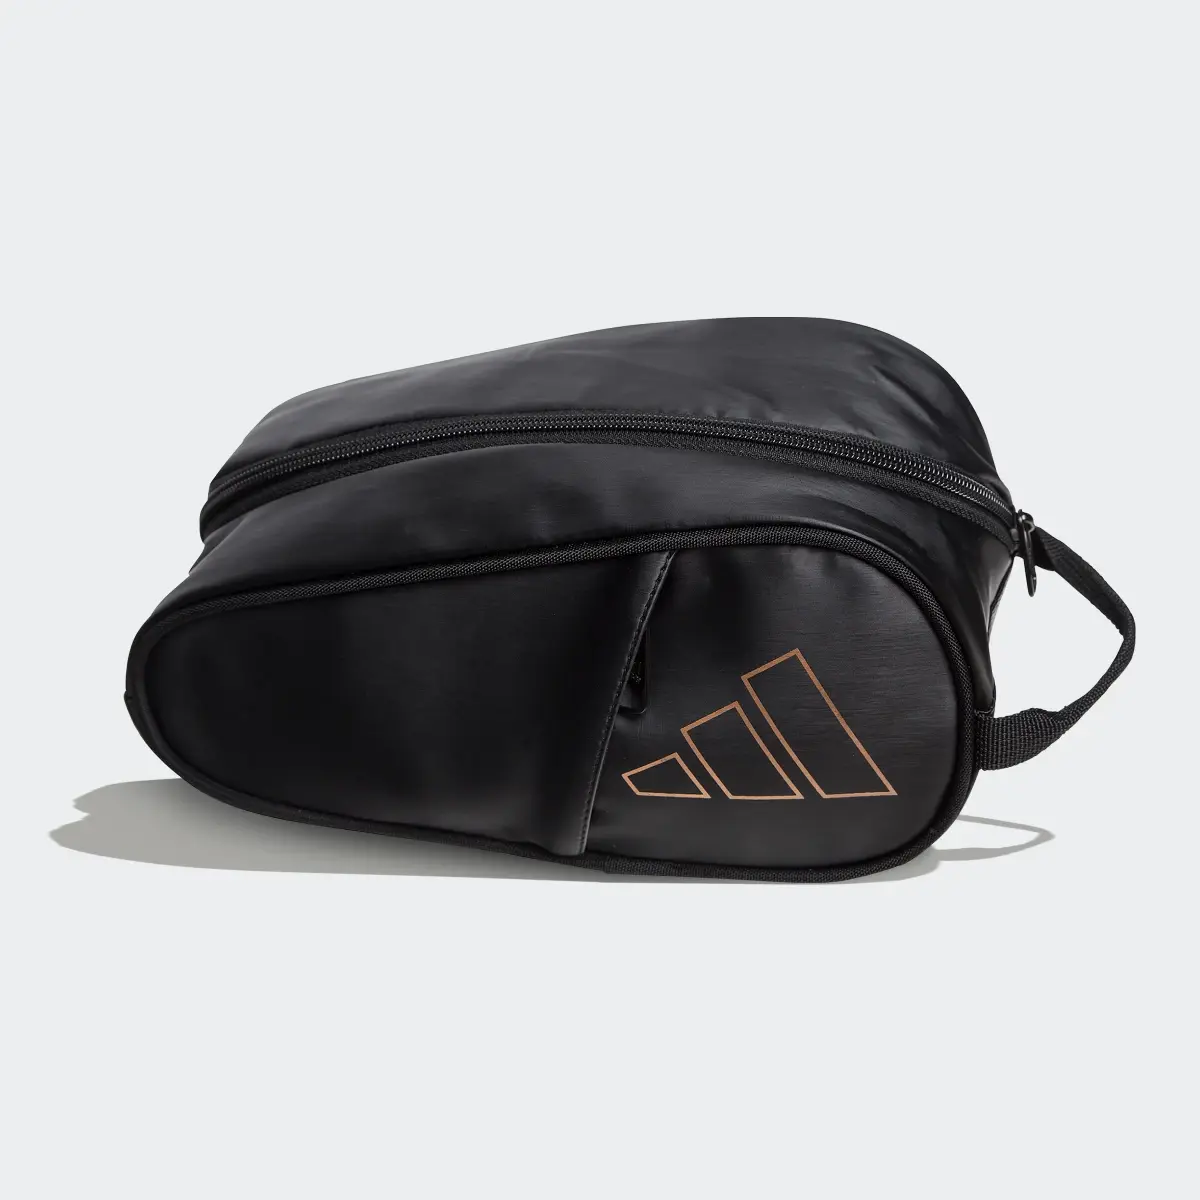 Adidas Accesory Bag 3.2. 2